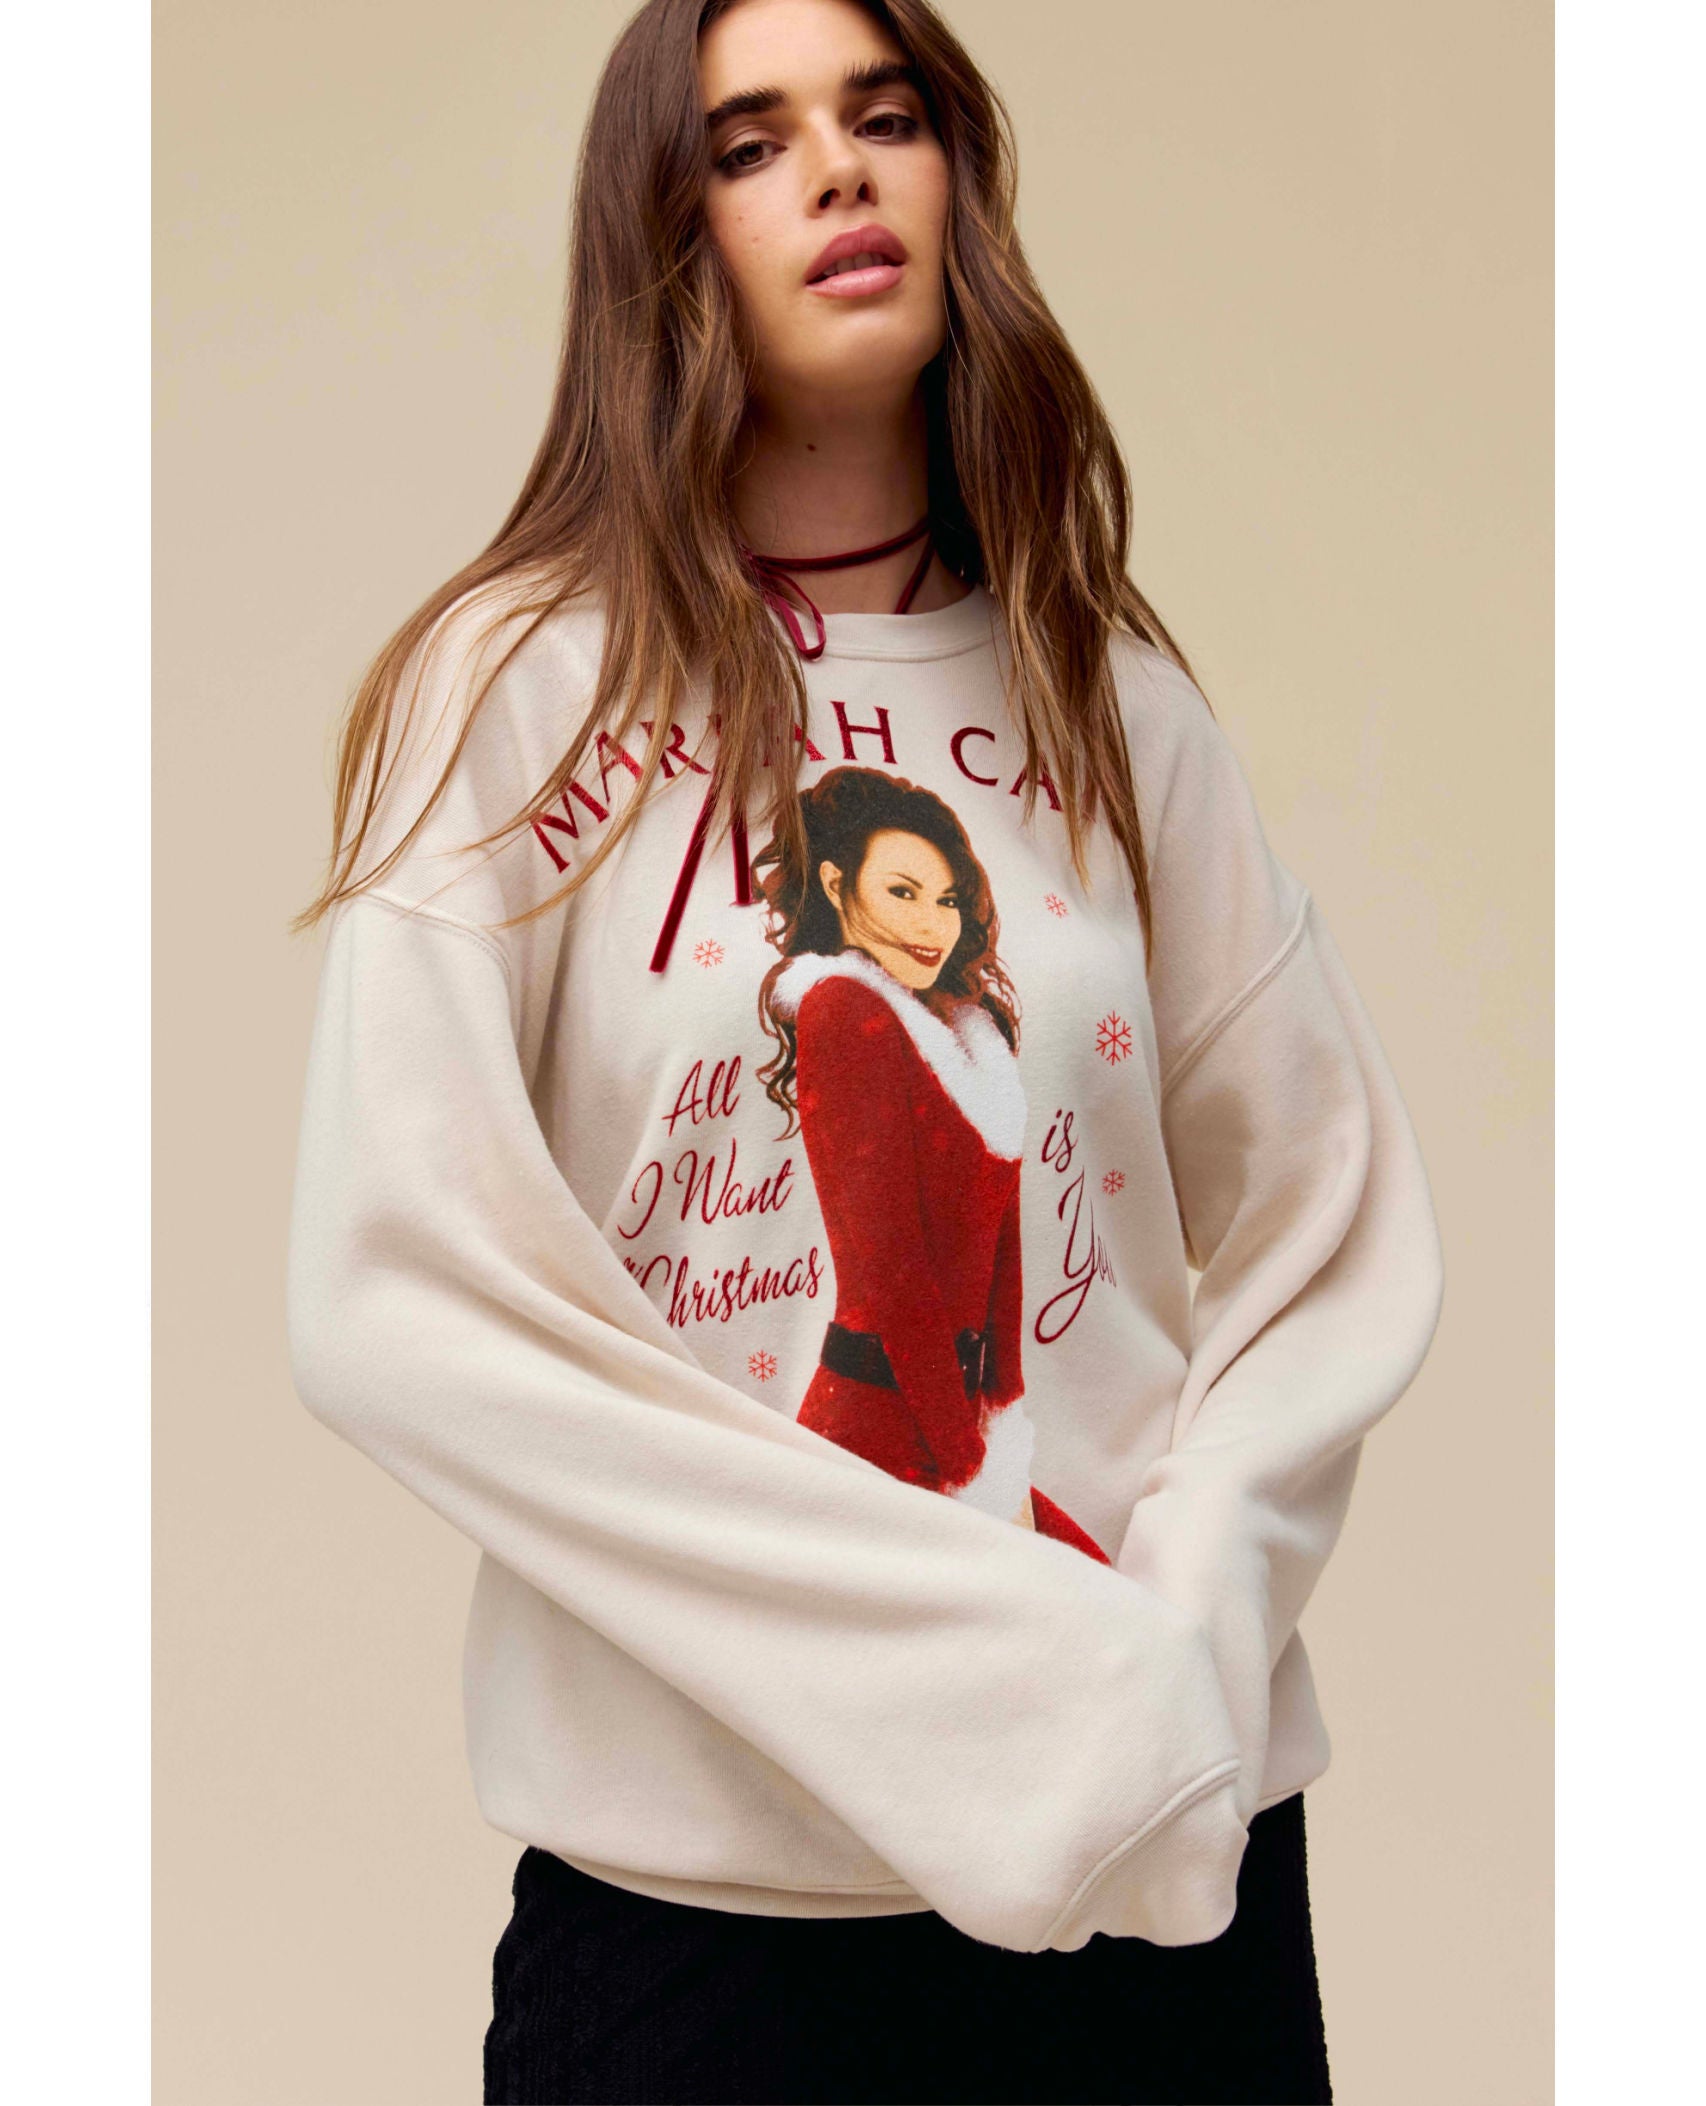 Mariah Carey All I Want For Christmas Crewneck Sweatshirt